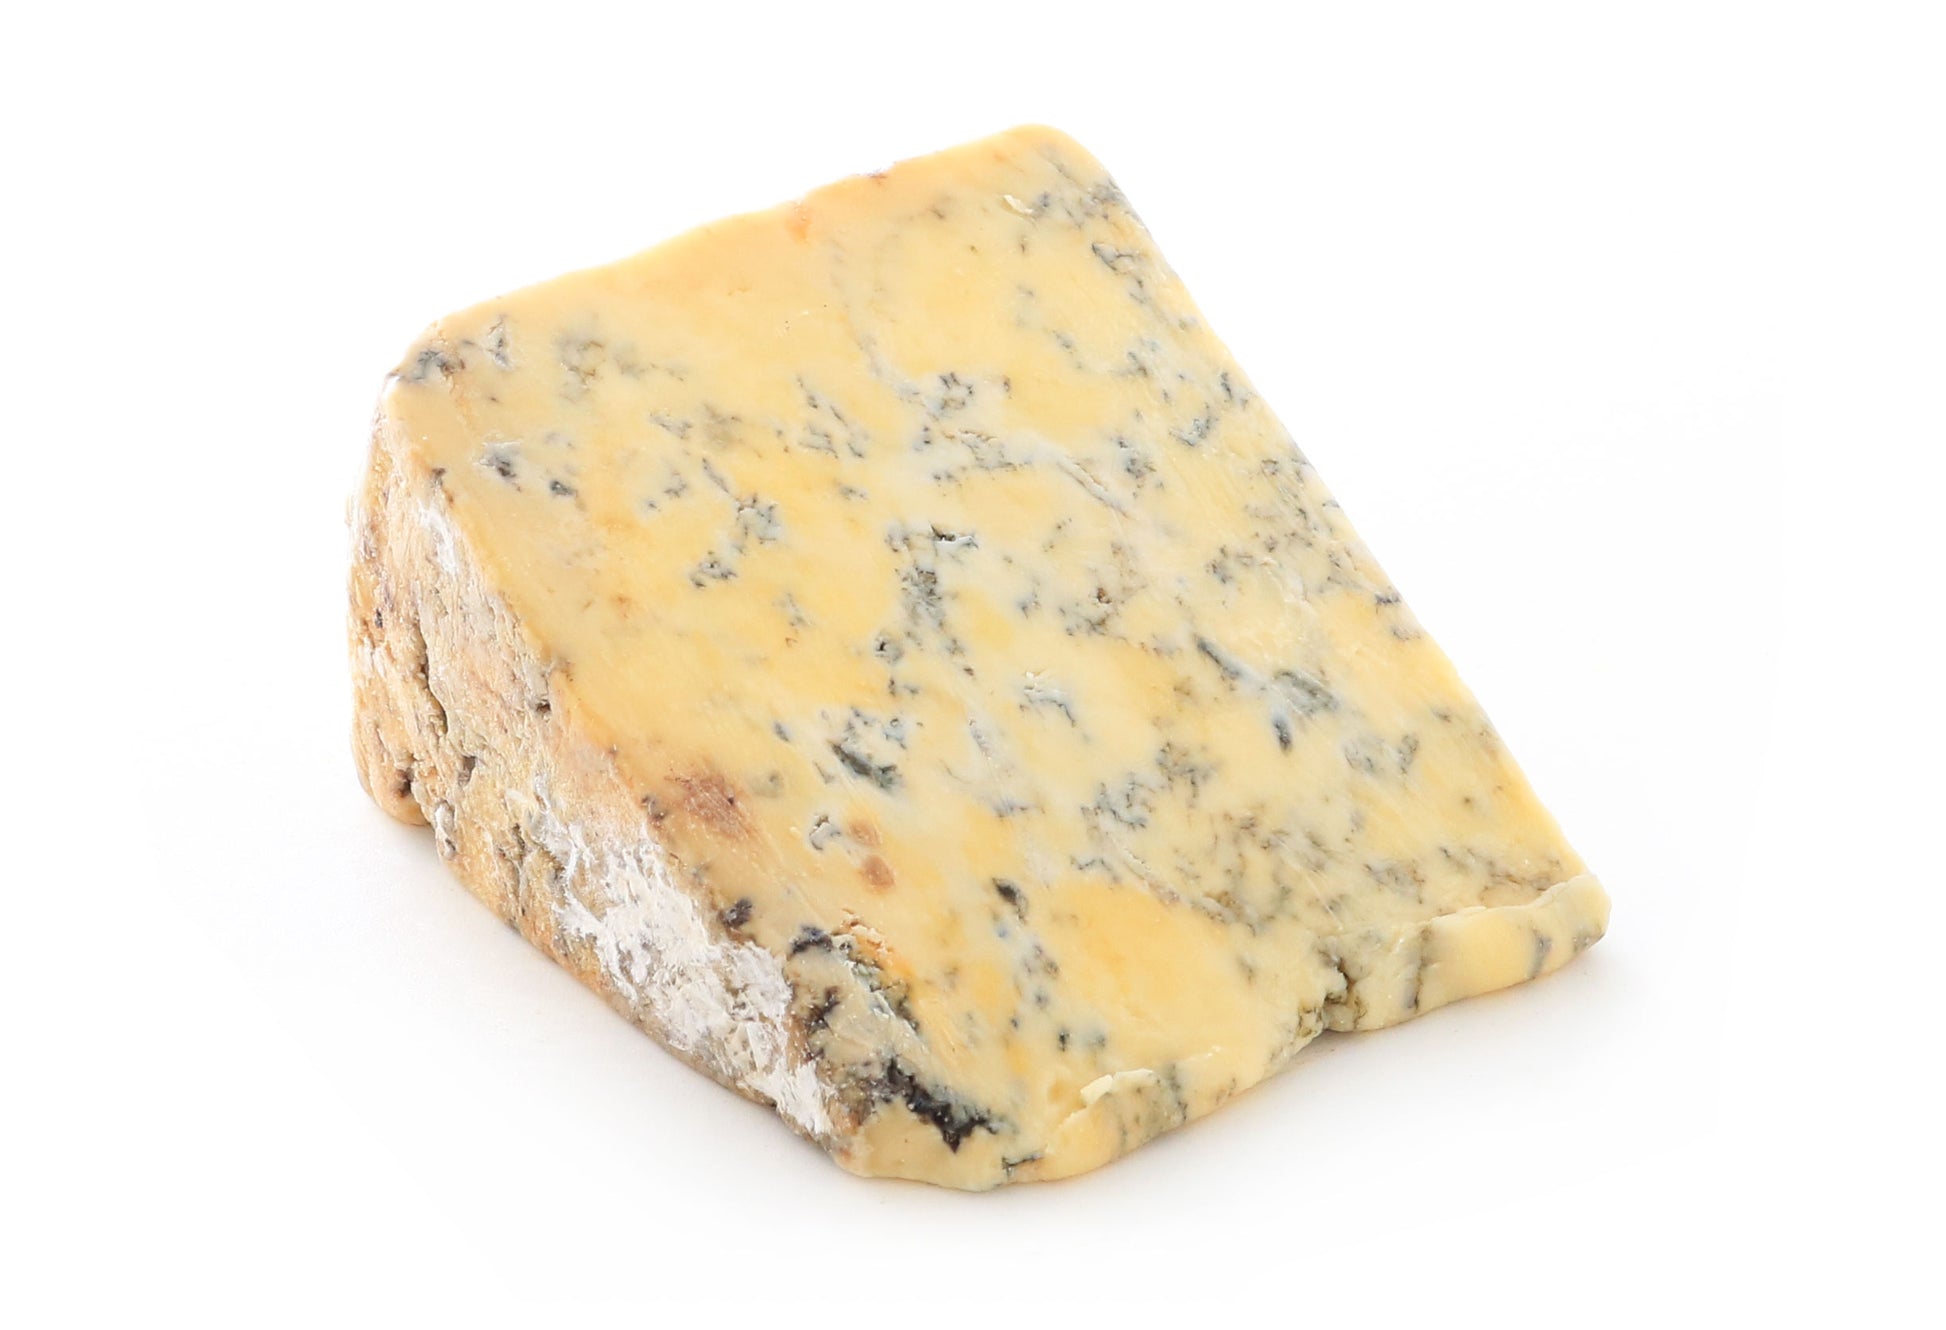 stilton blue cheese